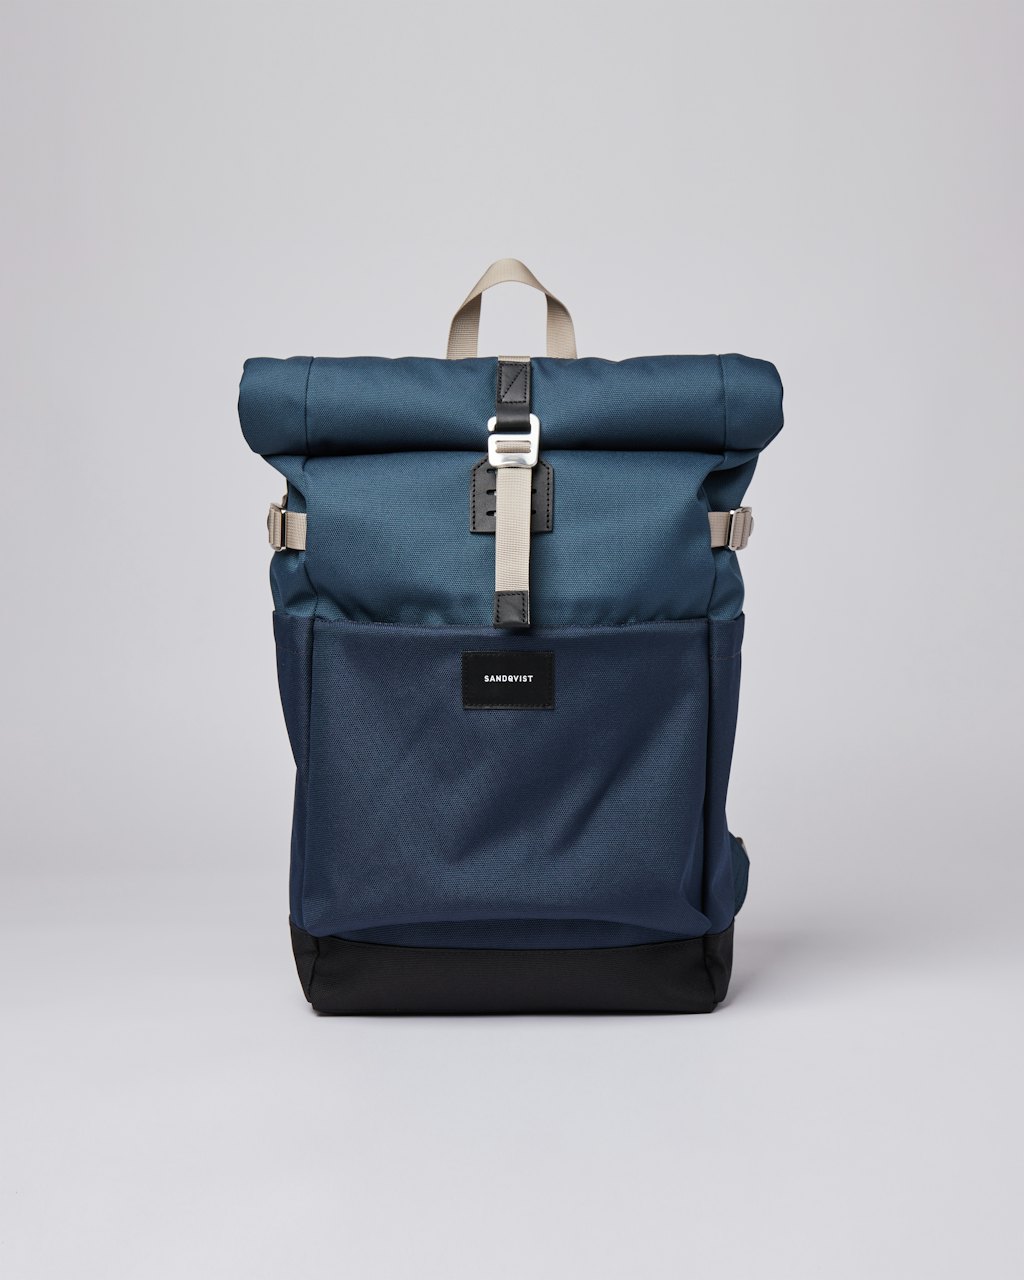 Sandqvist - Backpack - multi - steel - blue - navy - blue - ILON